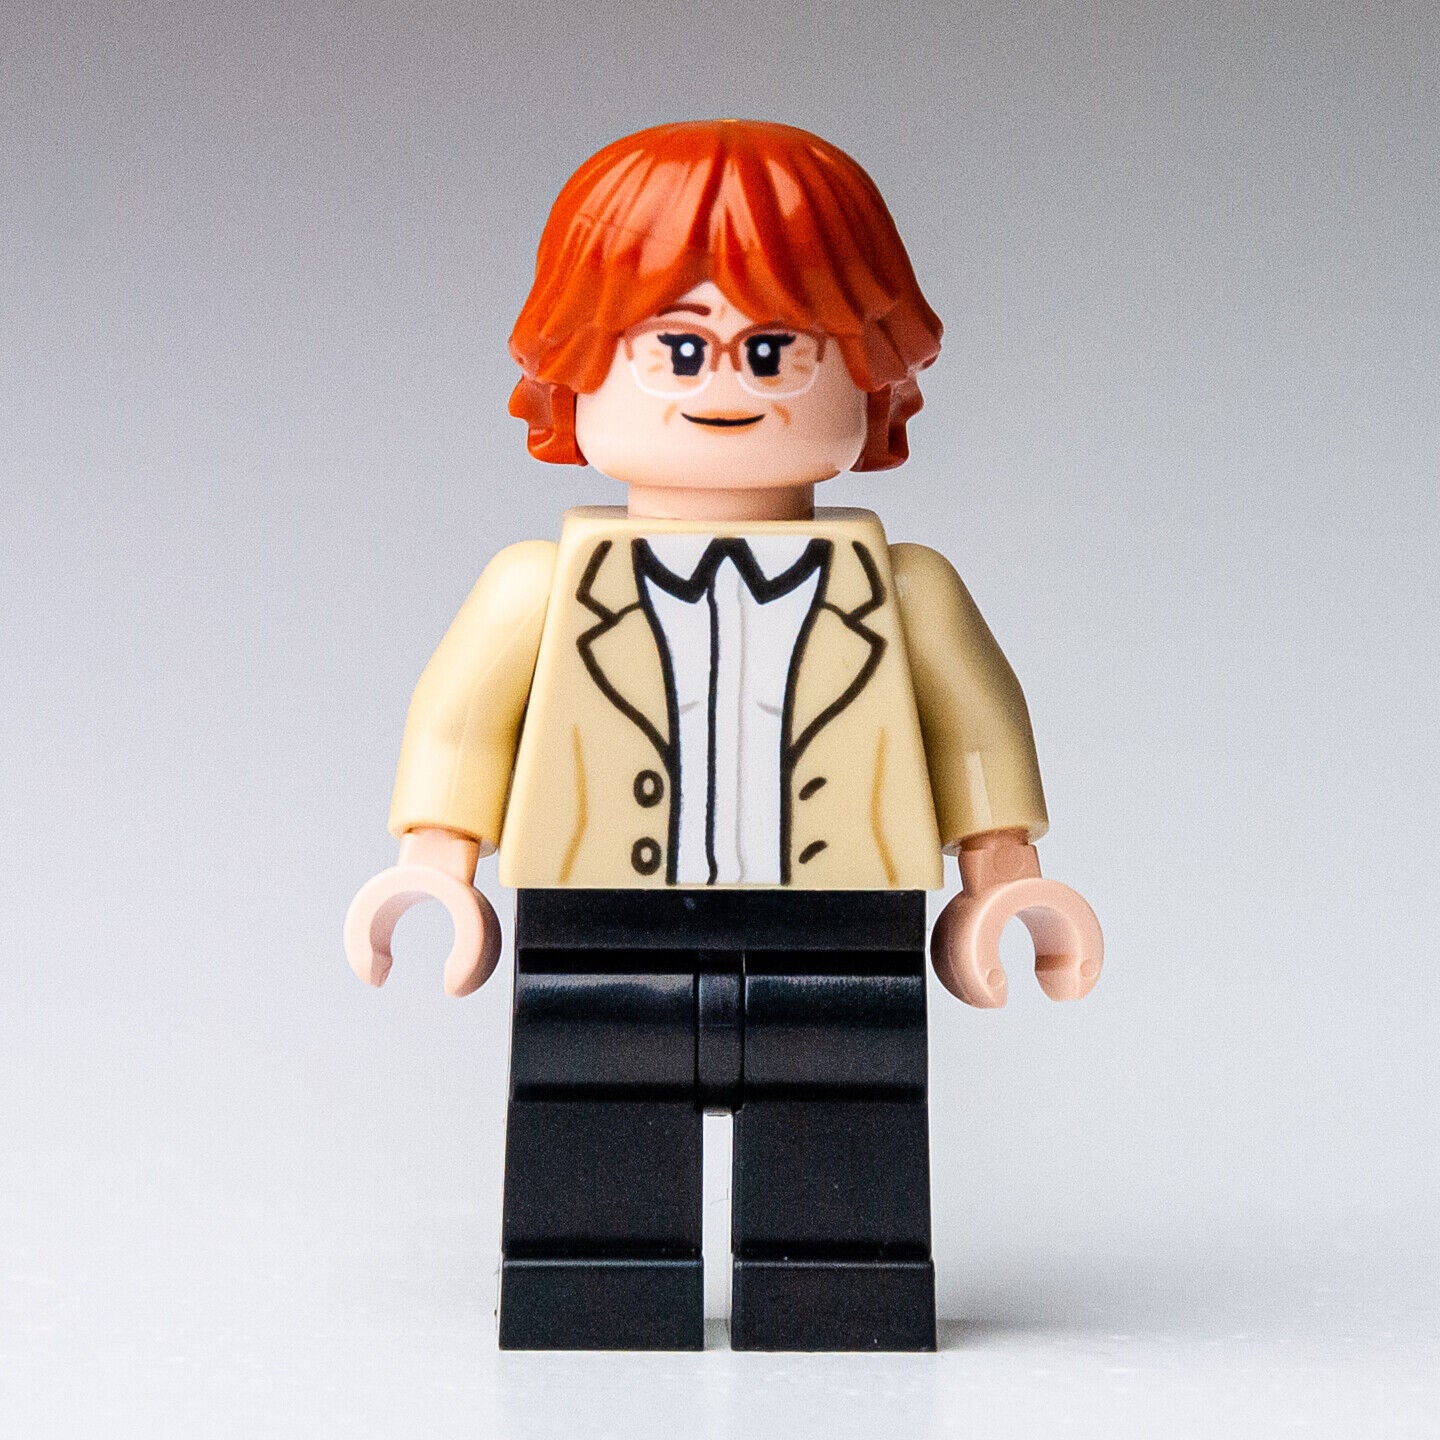 NEW Kathi Dooley - Queer Eye, The Fab 5 Loft - 10291 (que007) LEGO Minifigure